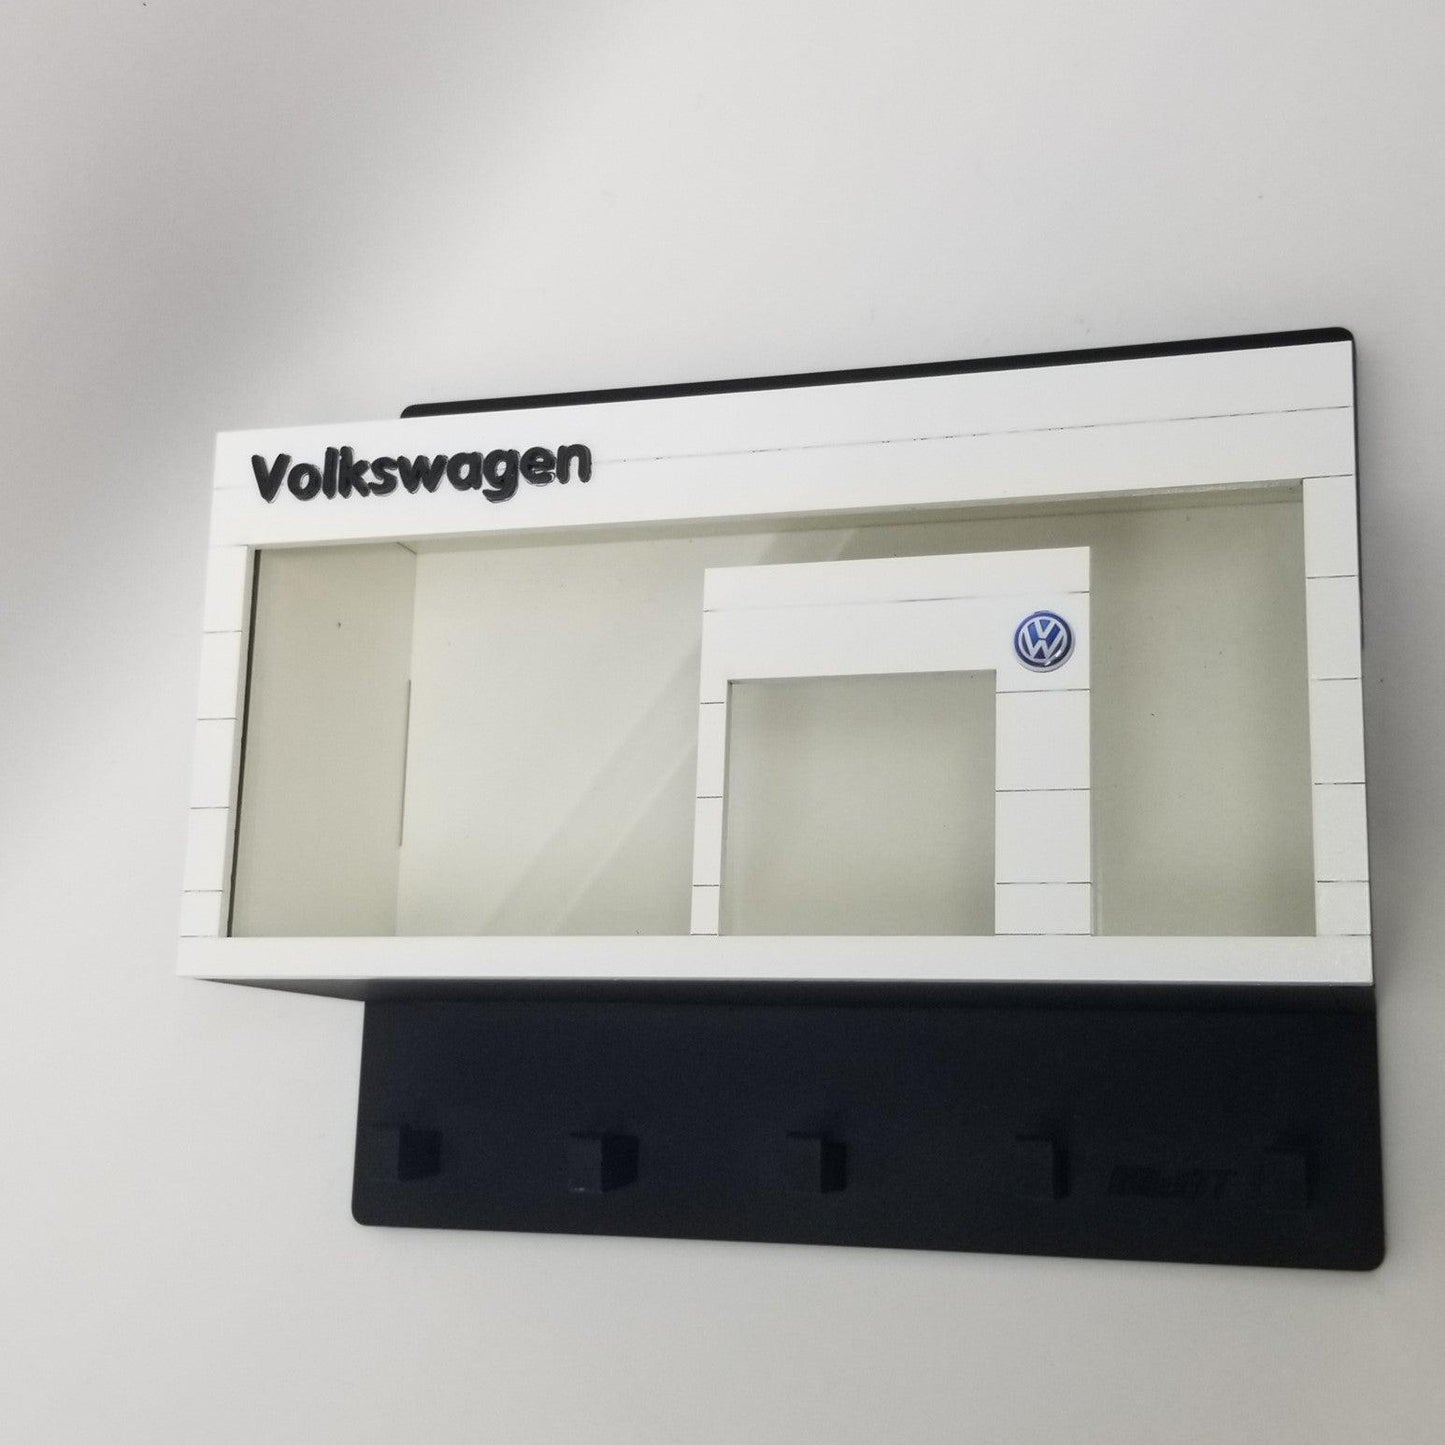 Volkswagen Dealership Wall Key Hook Rack - Exclusive Item Handcrafted Key Holder - Brazilian Shop